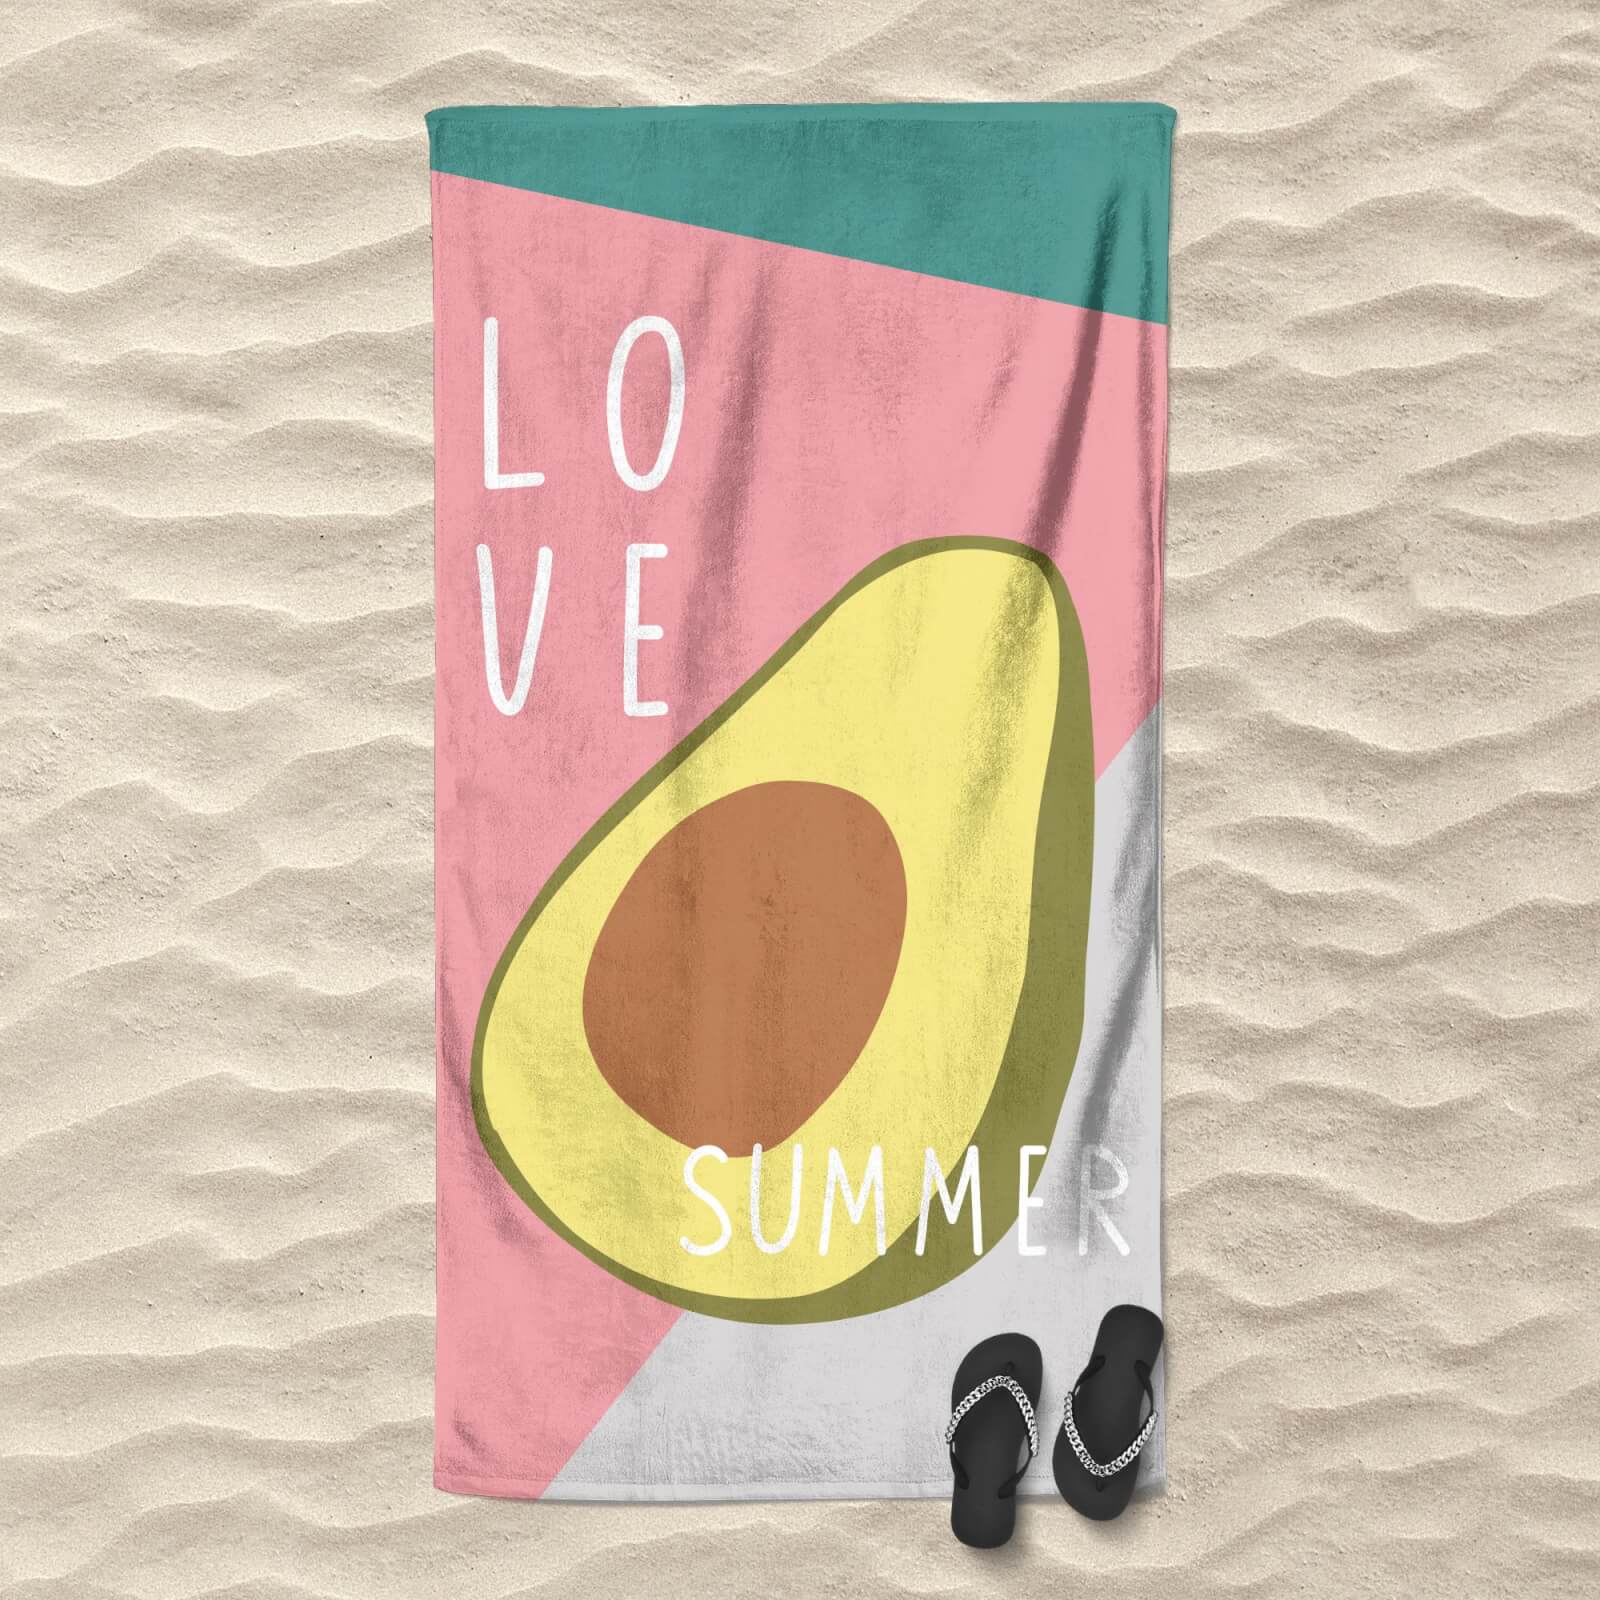 Avo Good Summer Beach Towel